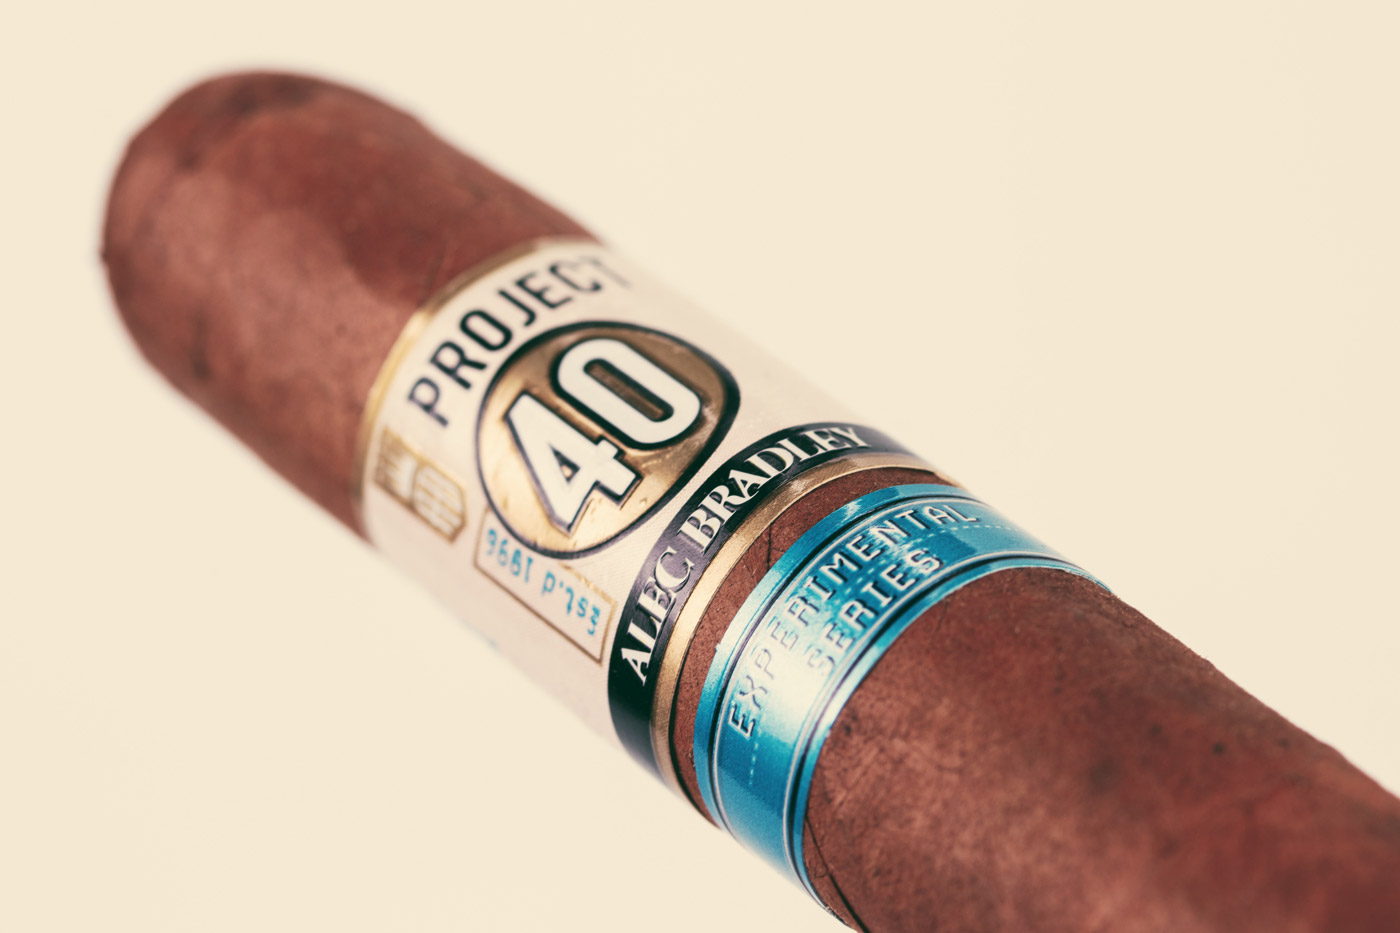 Alec Bradley Project 40 Robusto cigar review